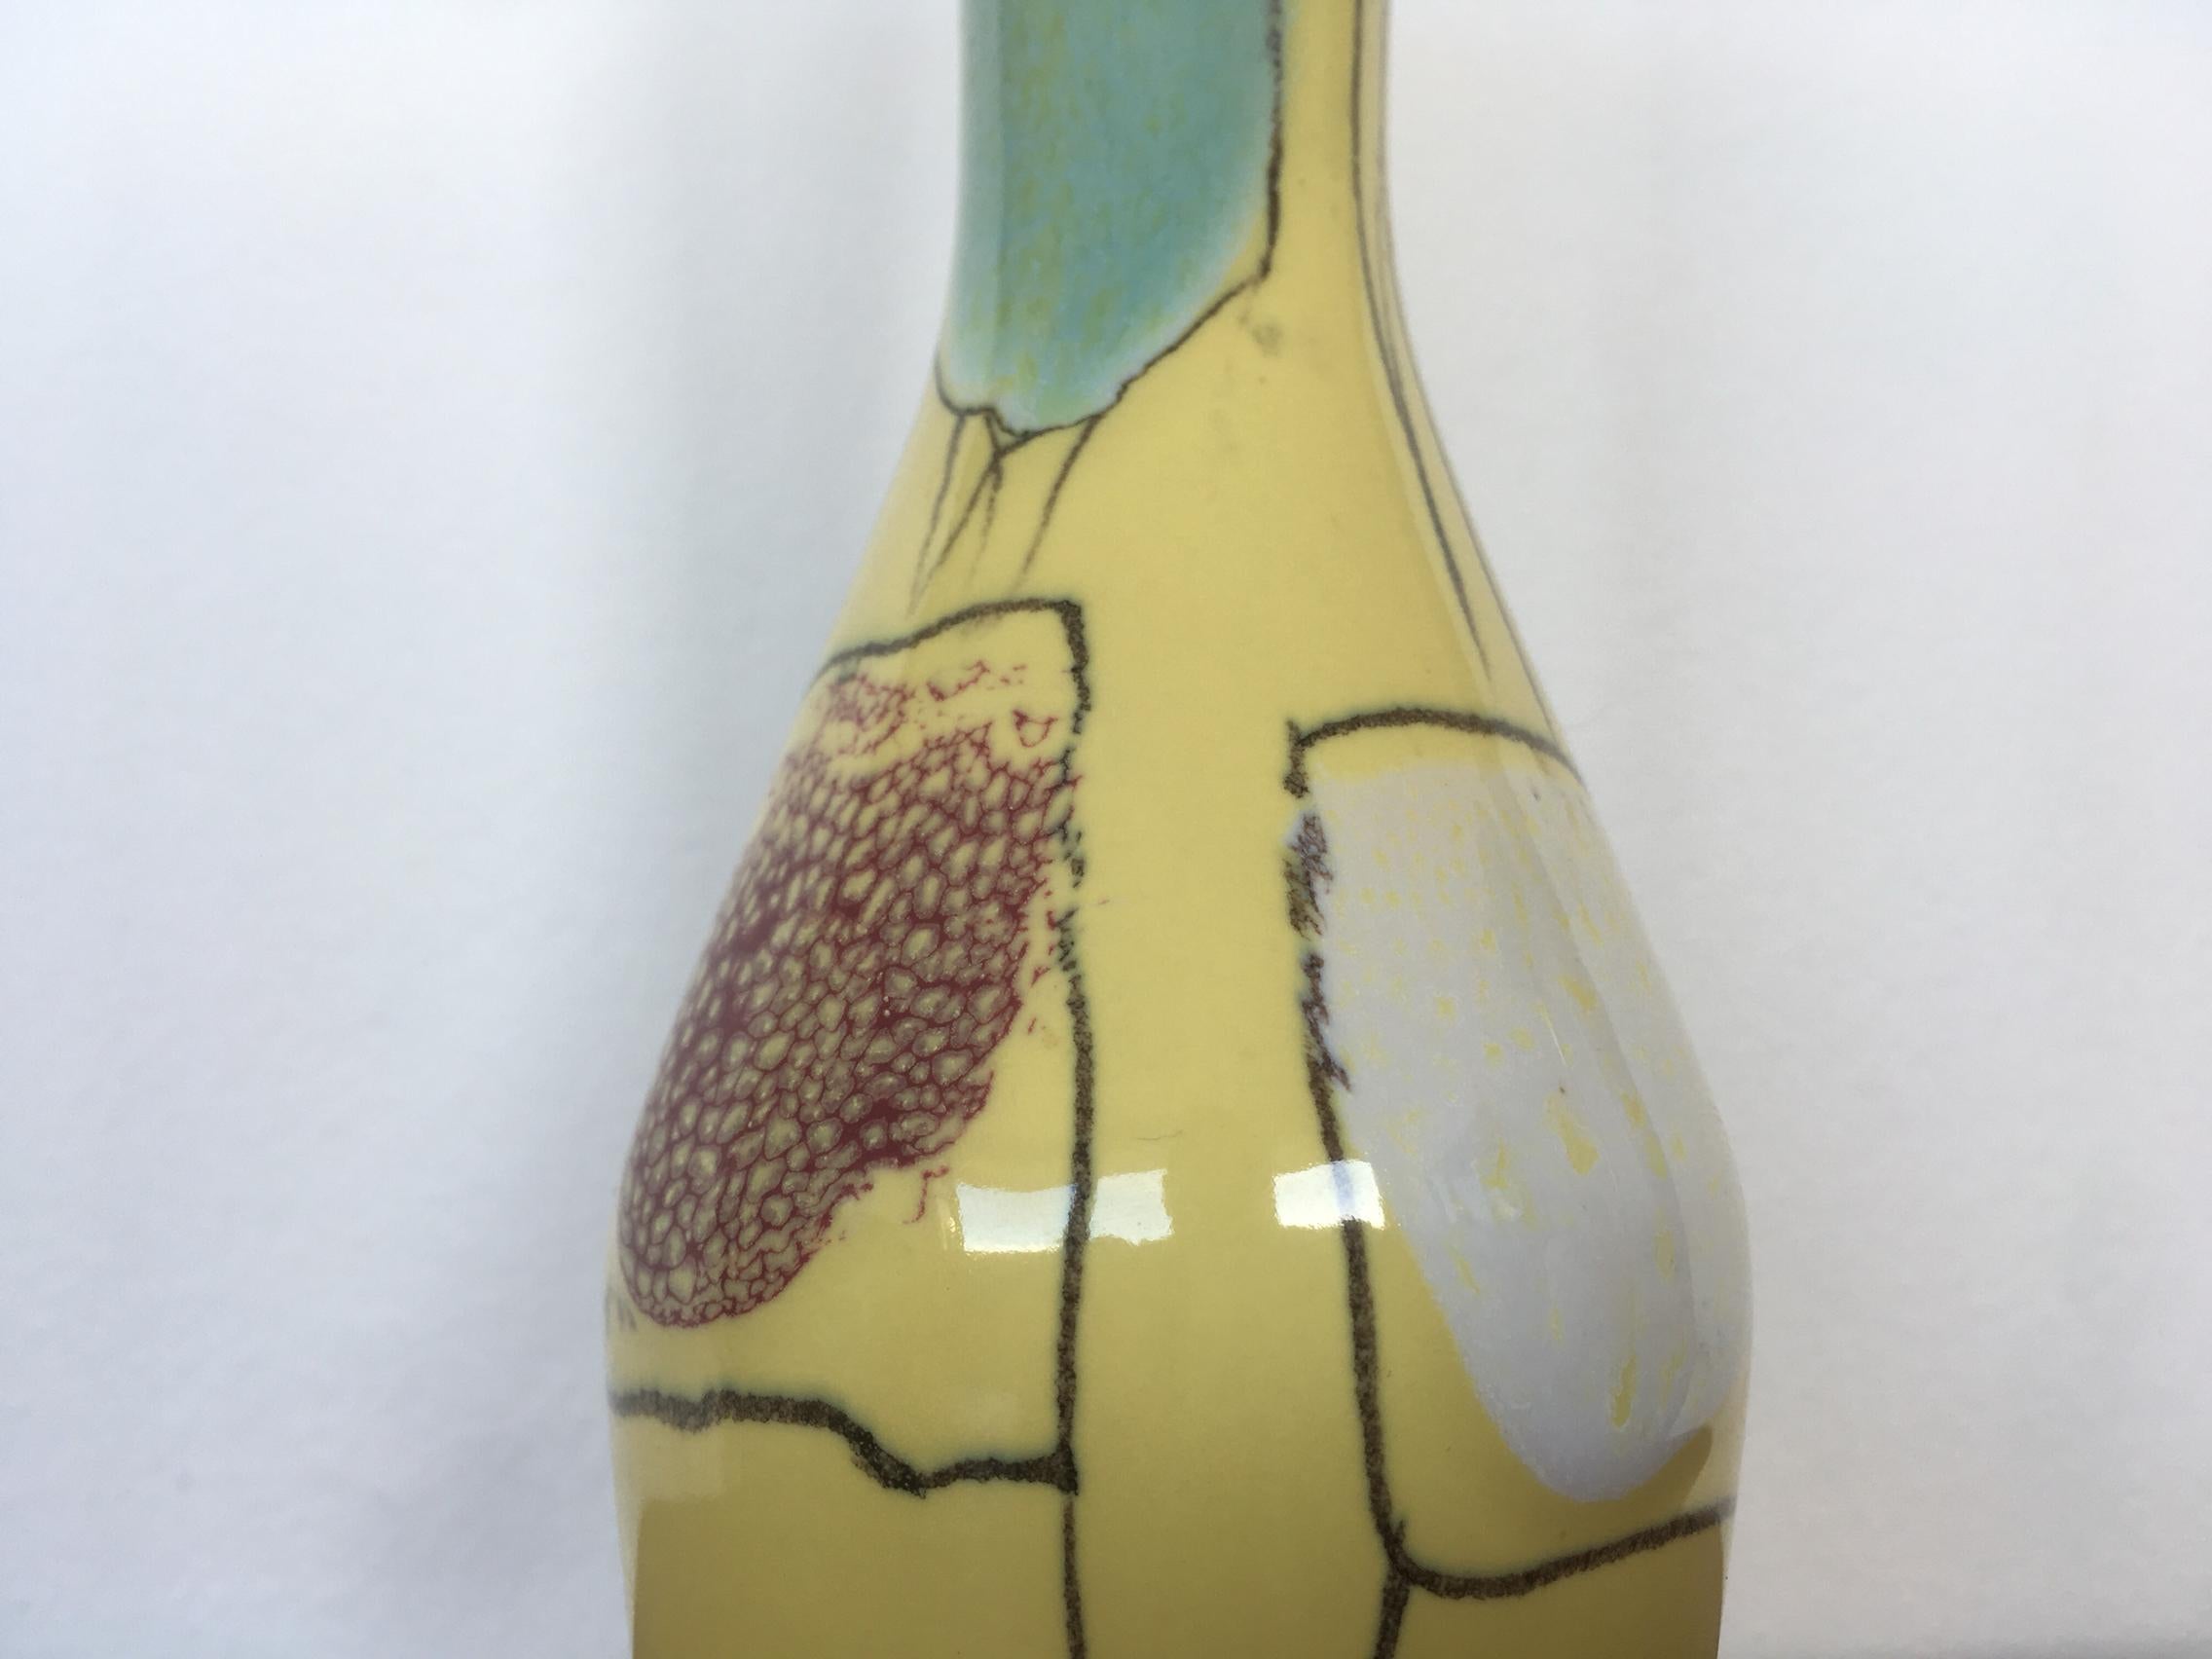 Czech Midcentury Design Ceramic Vase by Ditmar Urbach, circa 1960s For Sale